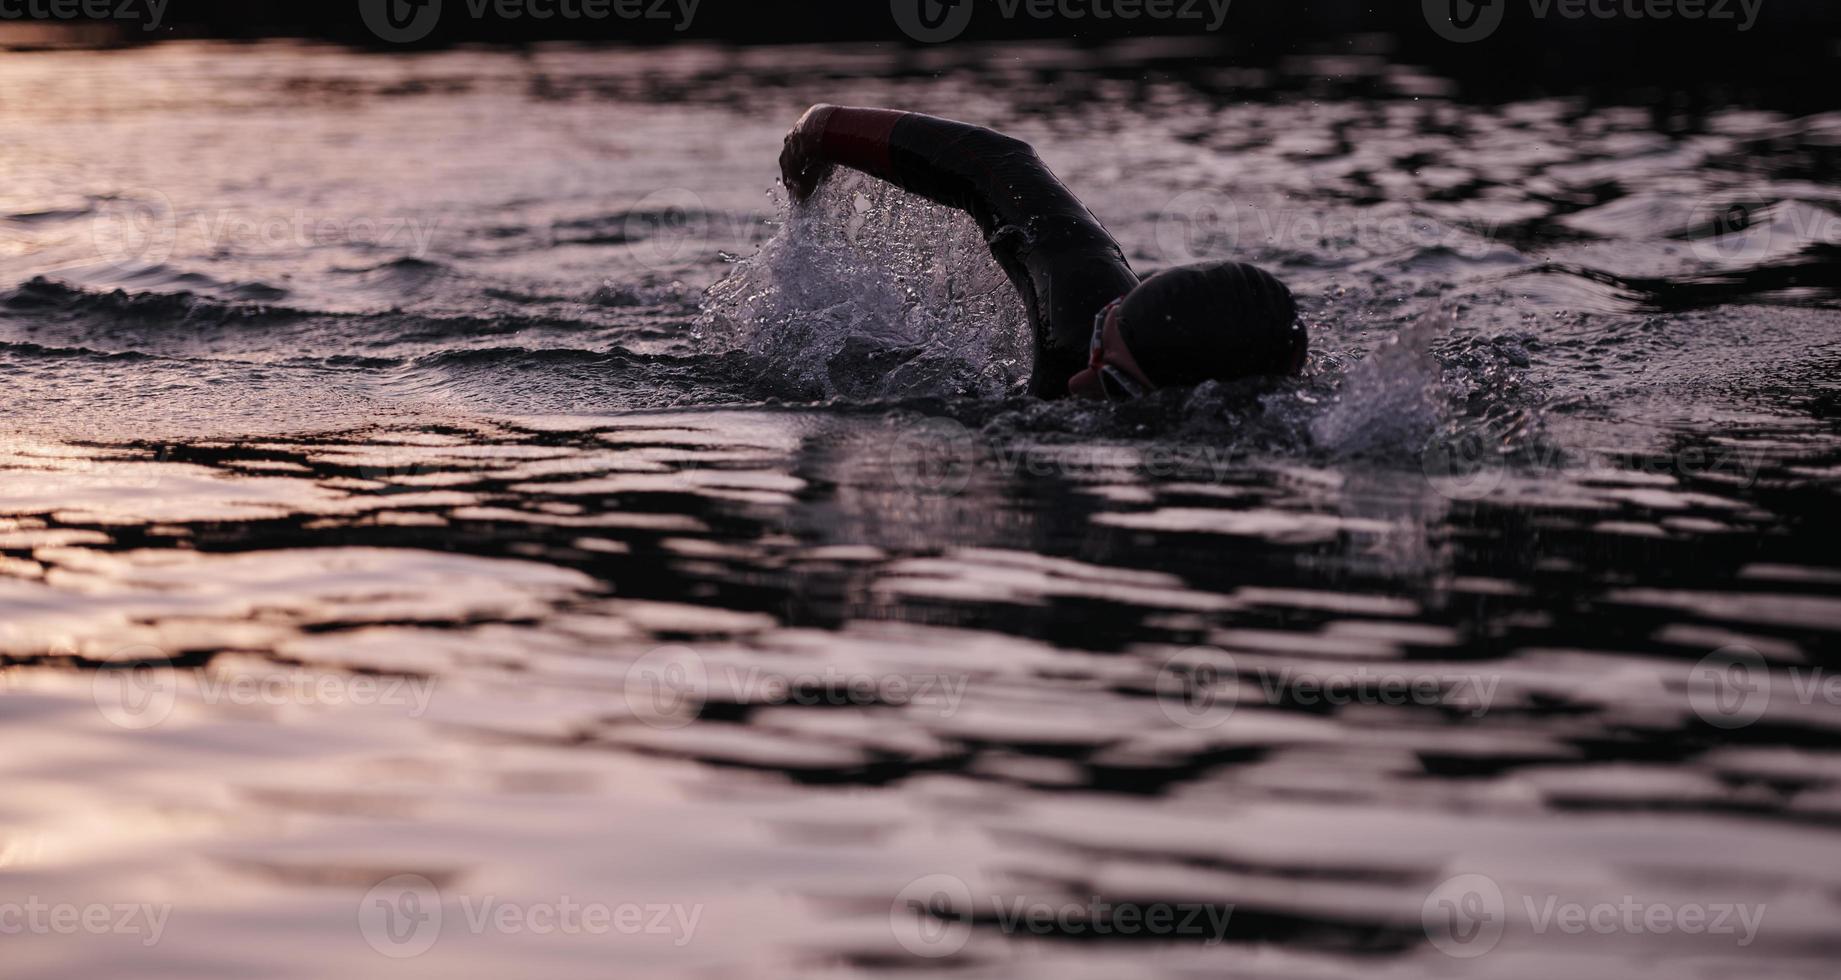 triathlon athlete swimming on lake in sunrise  wearing wetsuit photo